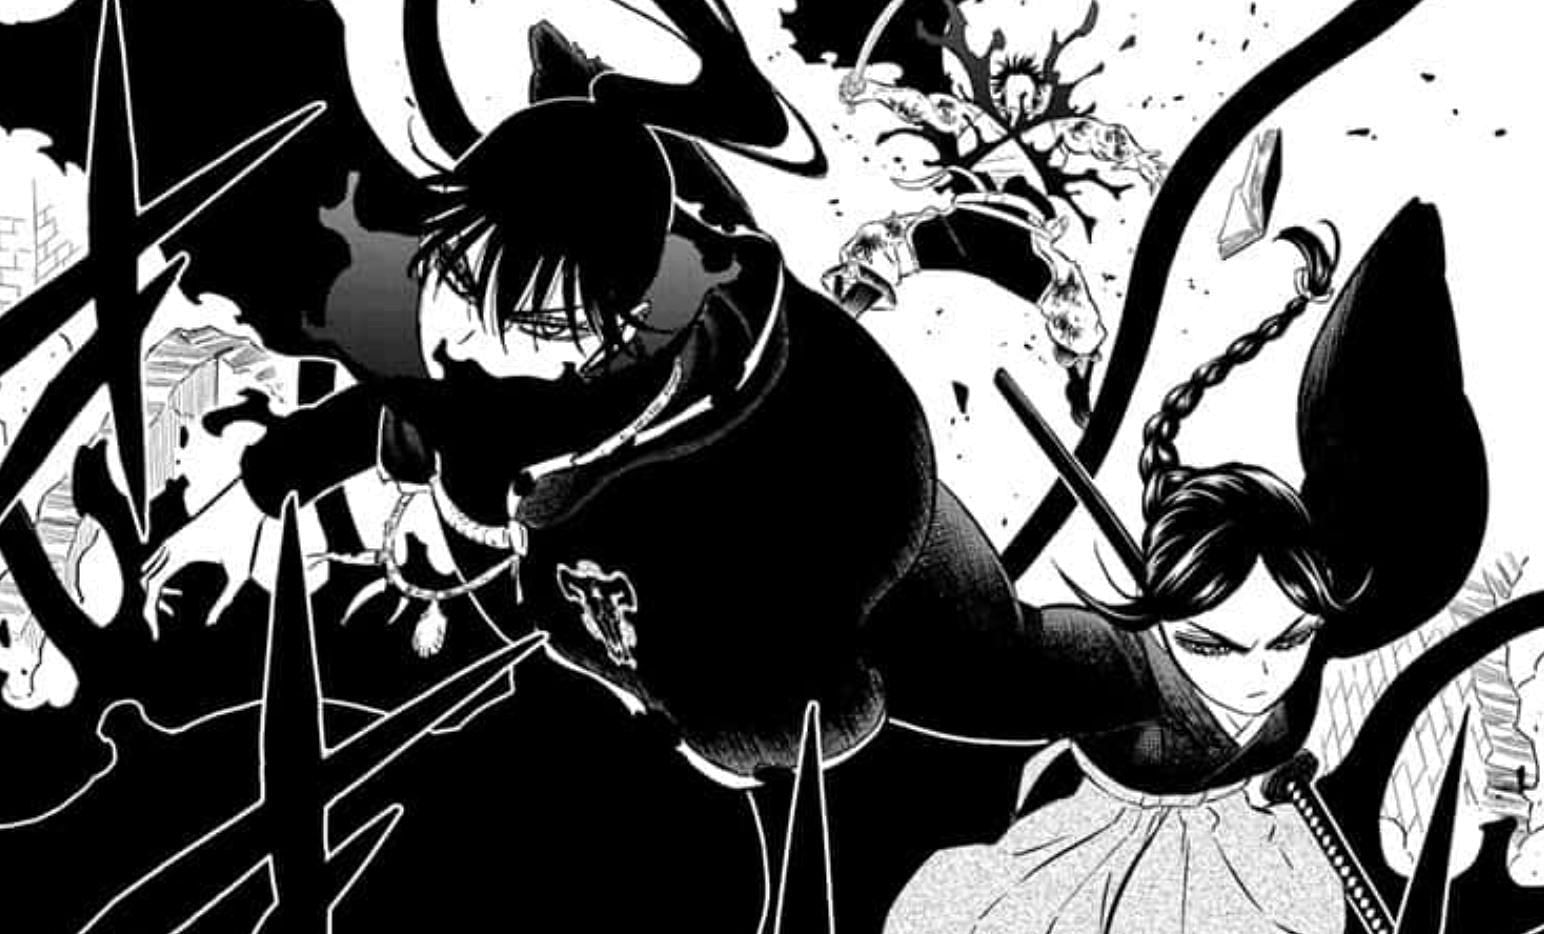 Nacht and Ichika as seen in Black Clover manga (Image via Shueisha)